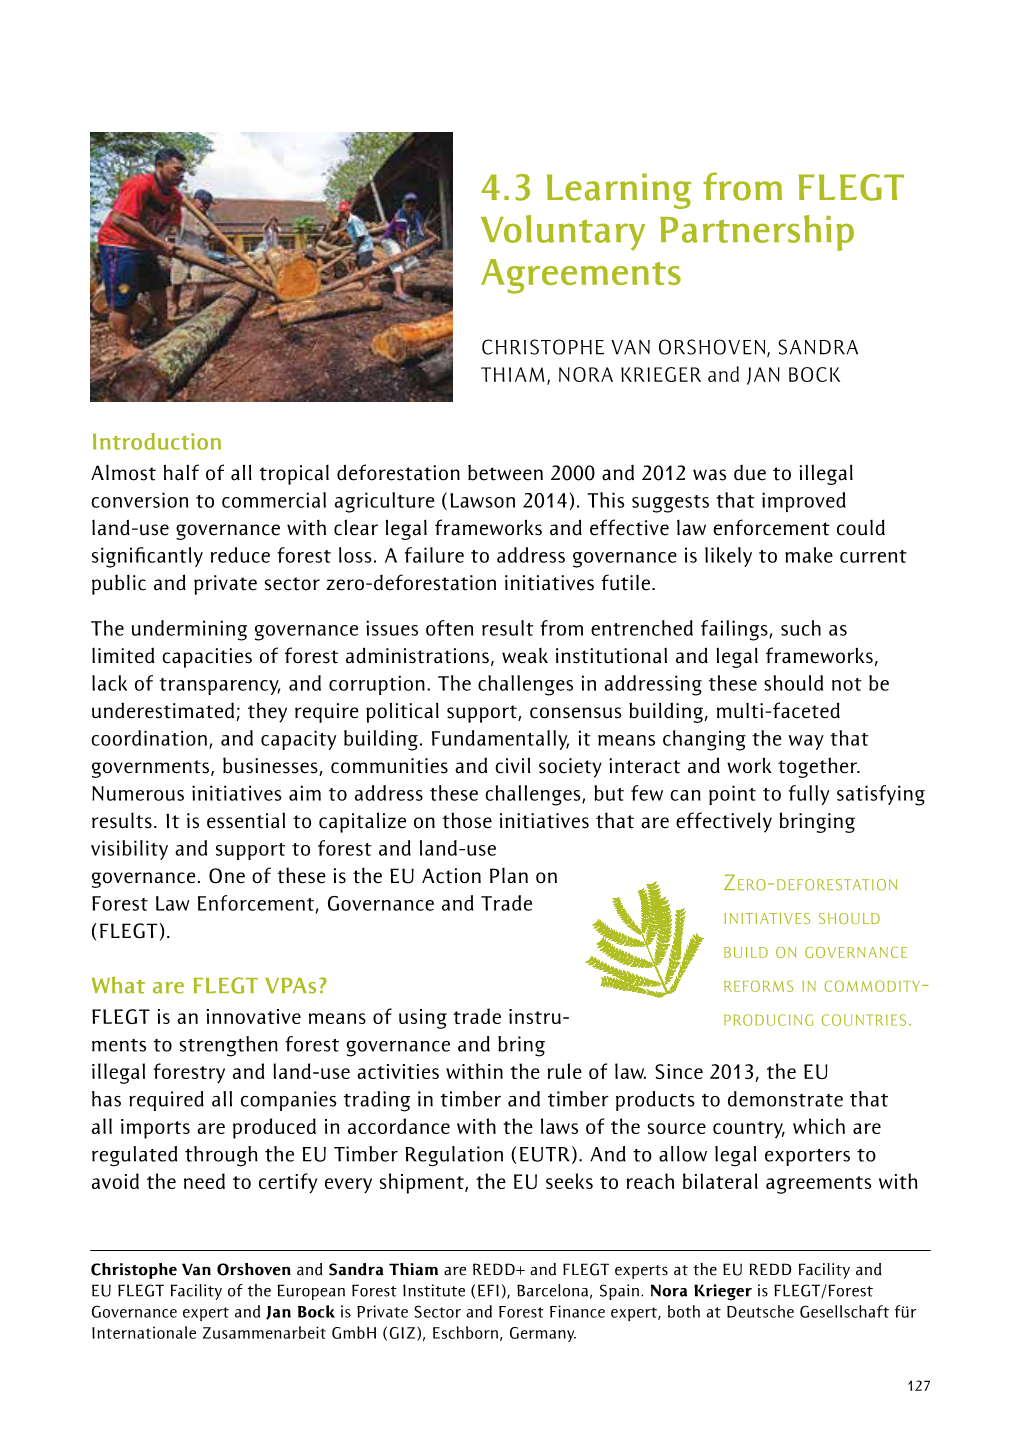 4.3 Learning from FLEGT Voluntary Partnership Agreements